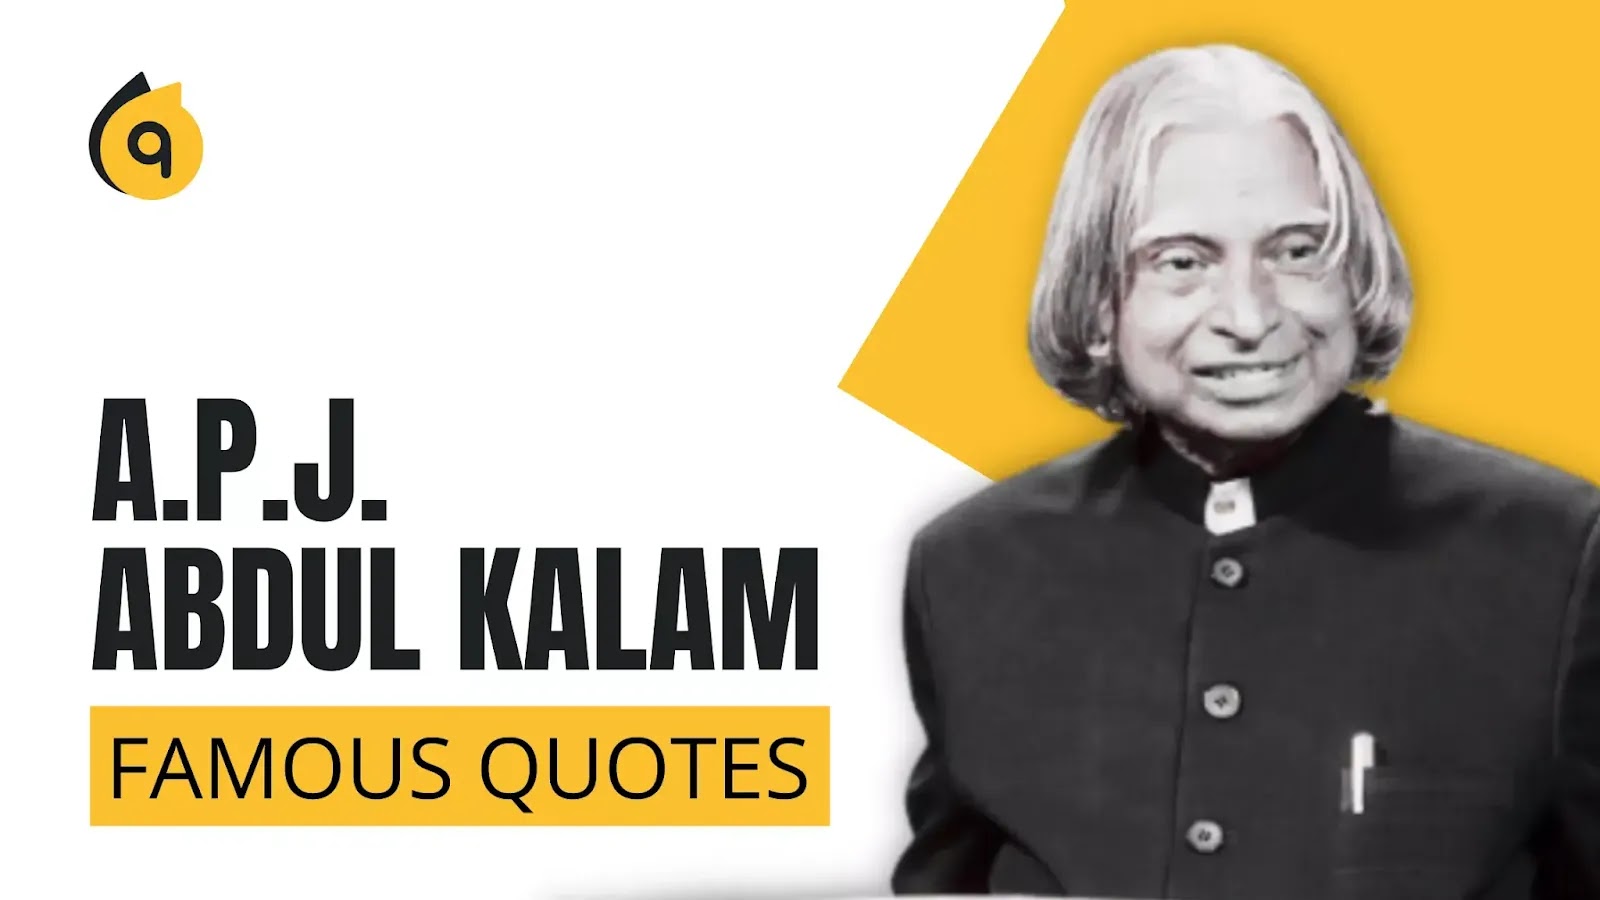 Abdul Kalam thoughts